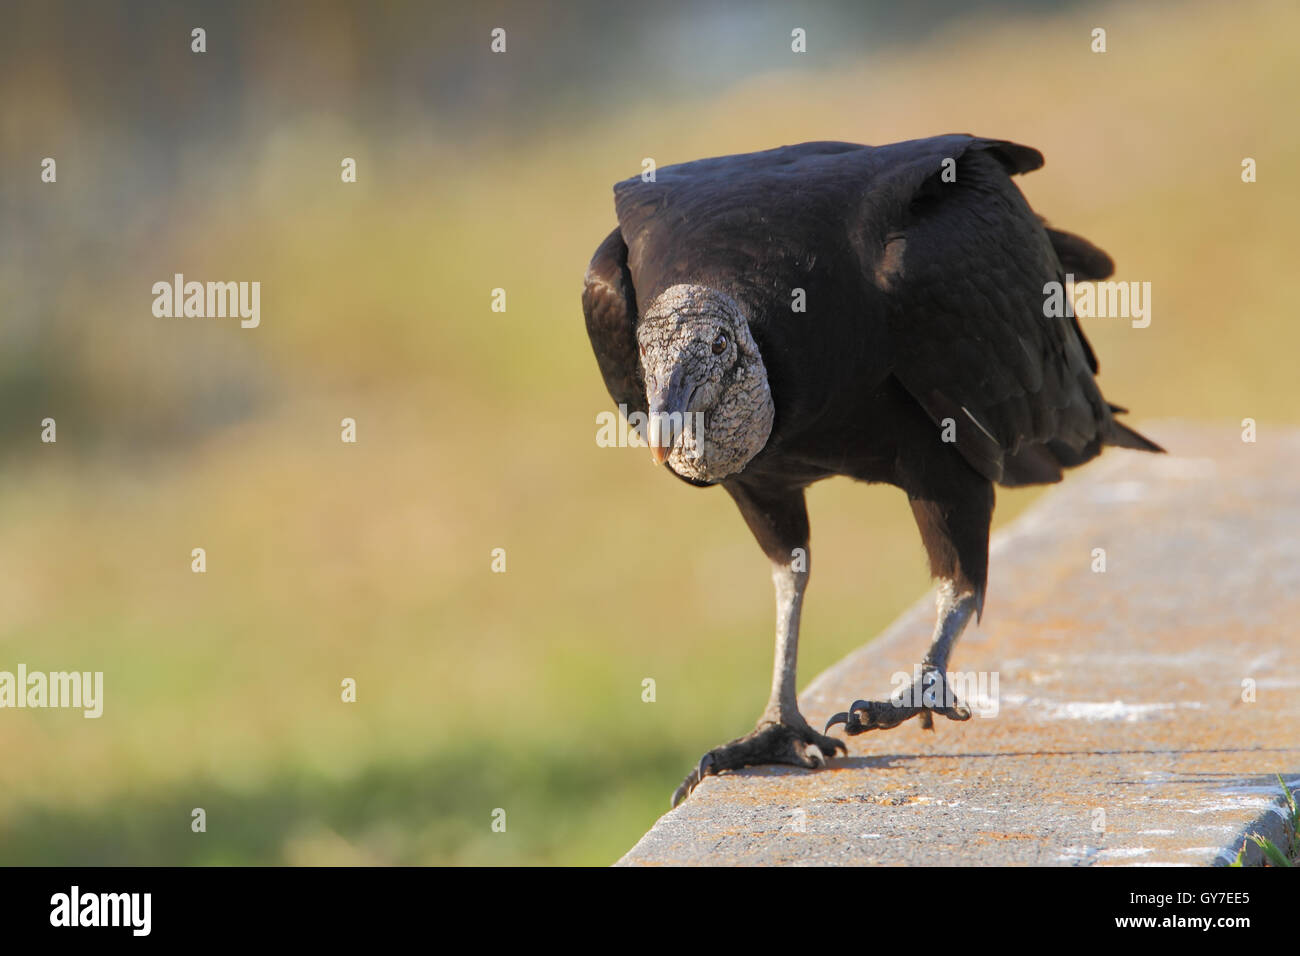 Black vulture (Coragyps atratus) standing, Lake Marian, Florida, USA Stock Photo